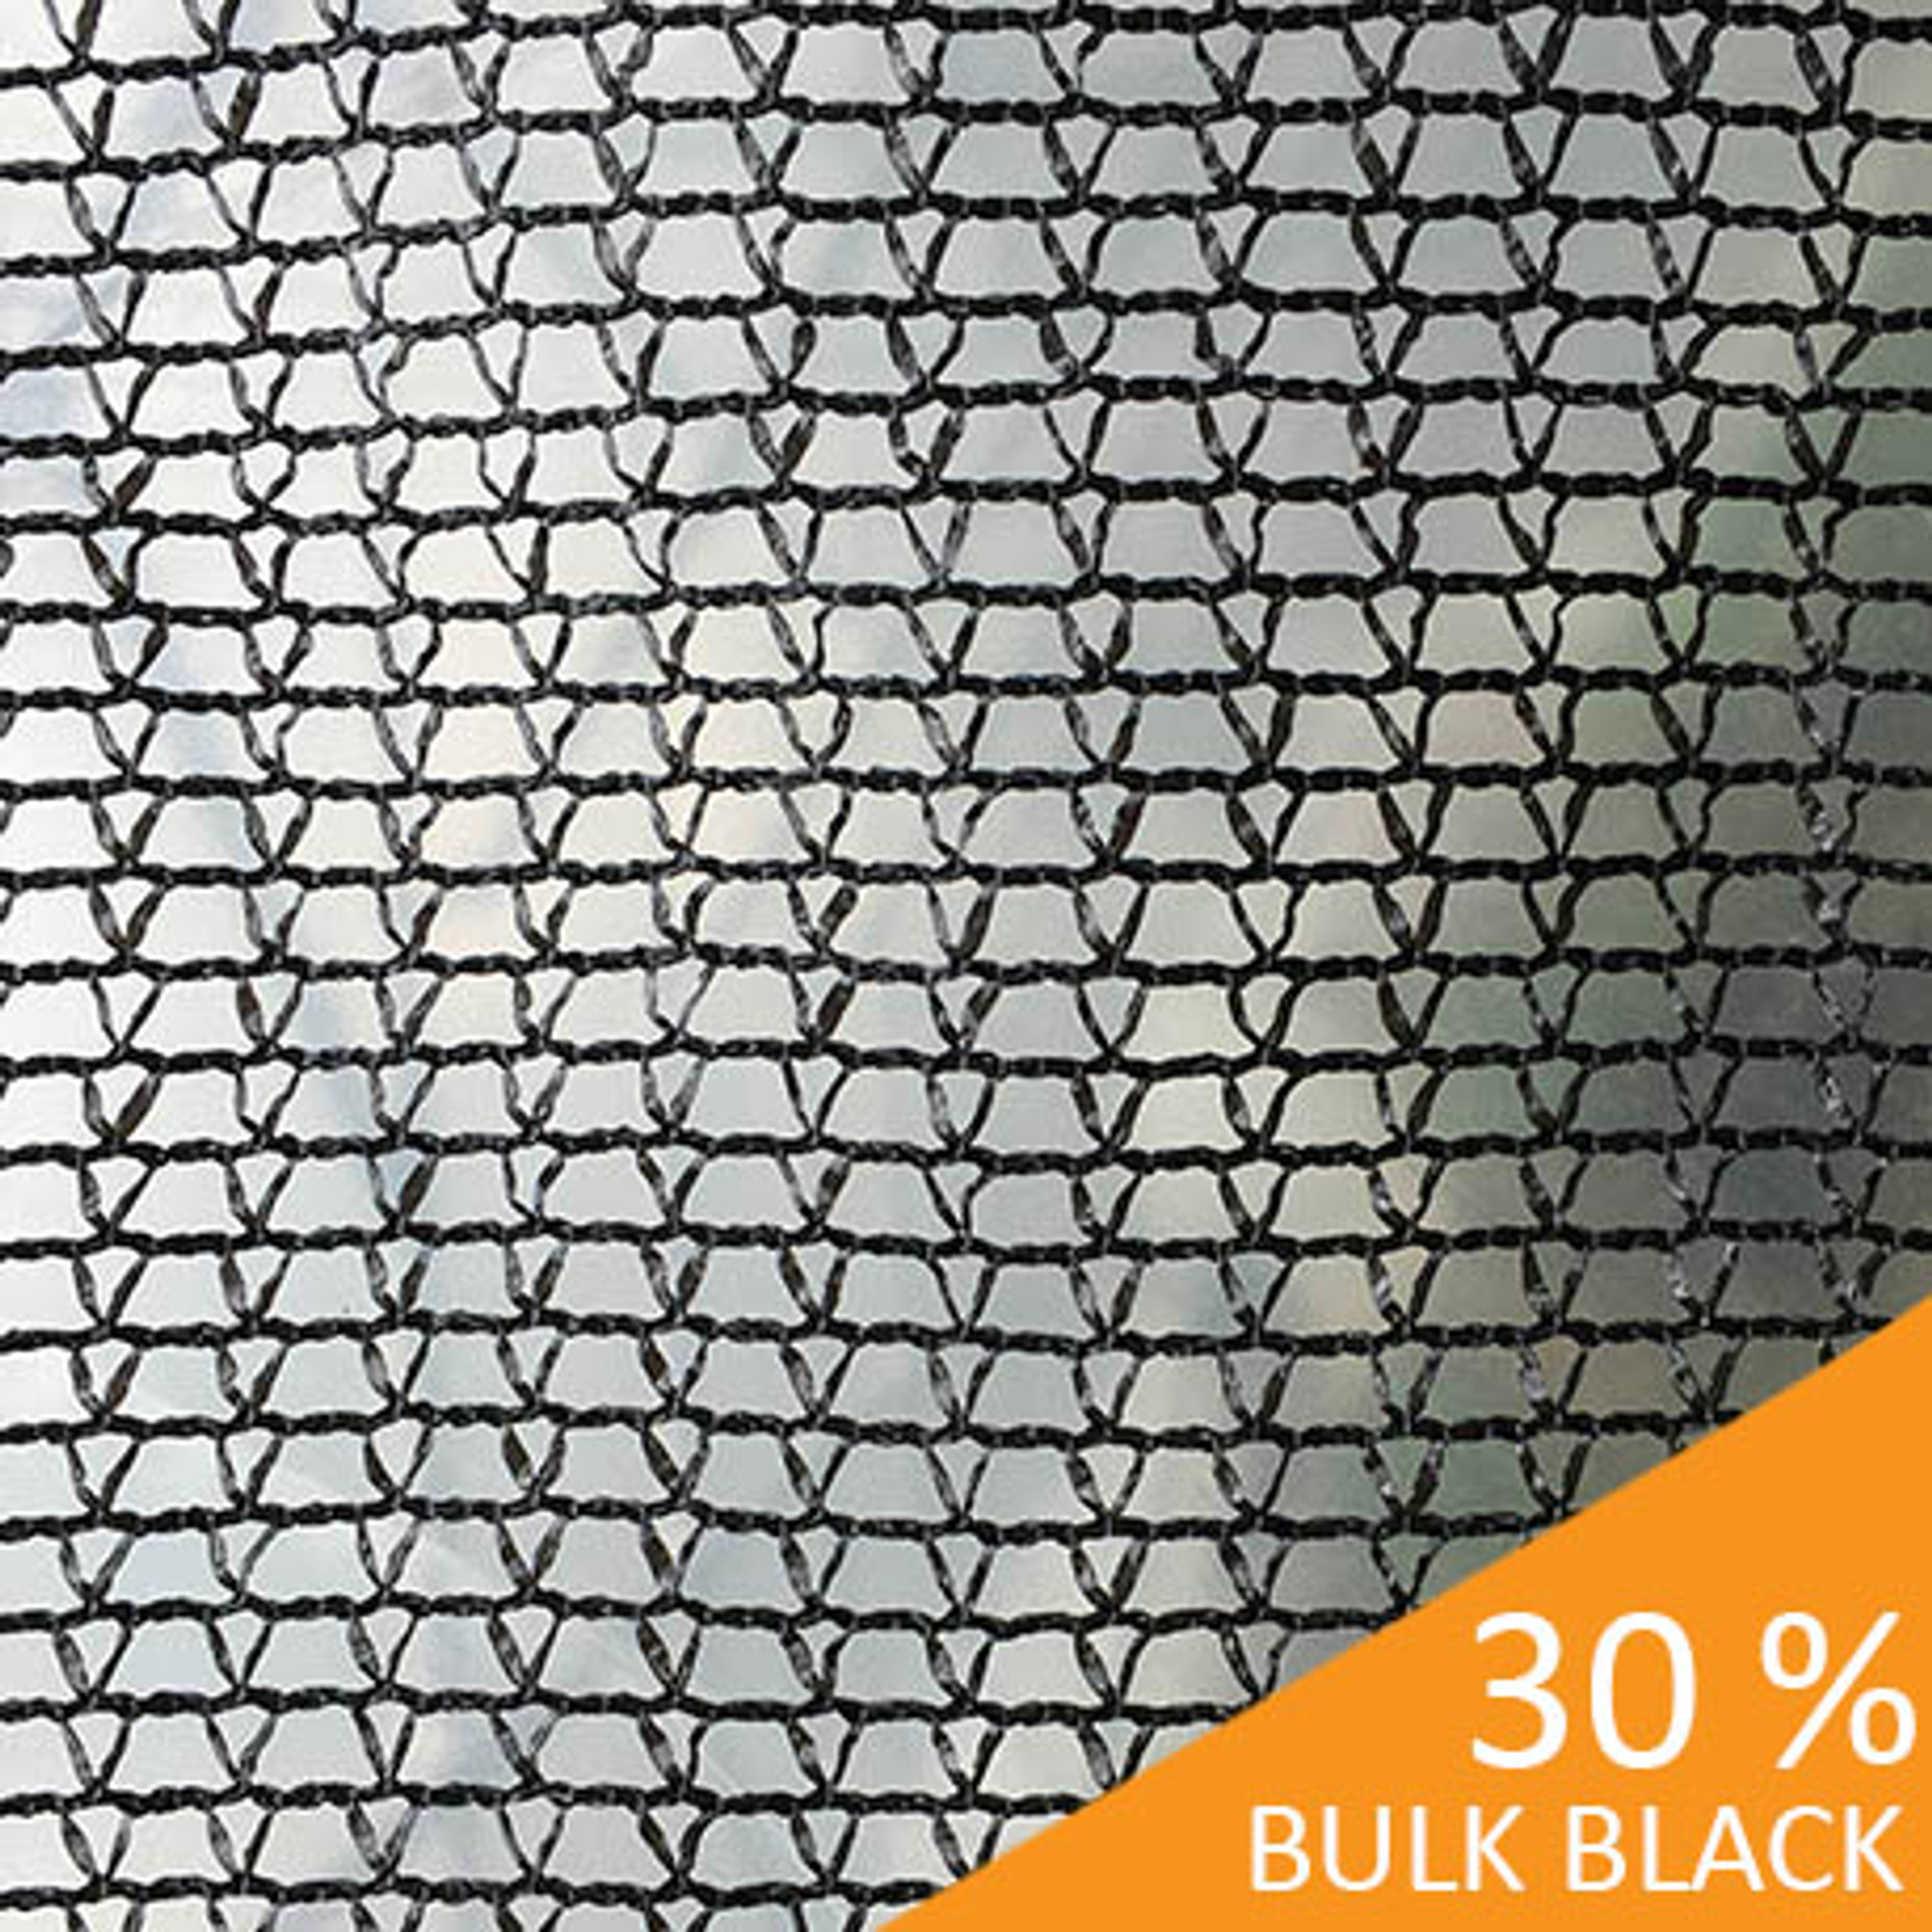 30% Black Shade Cloth - High Quality, Easy to Install